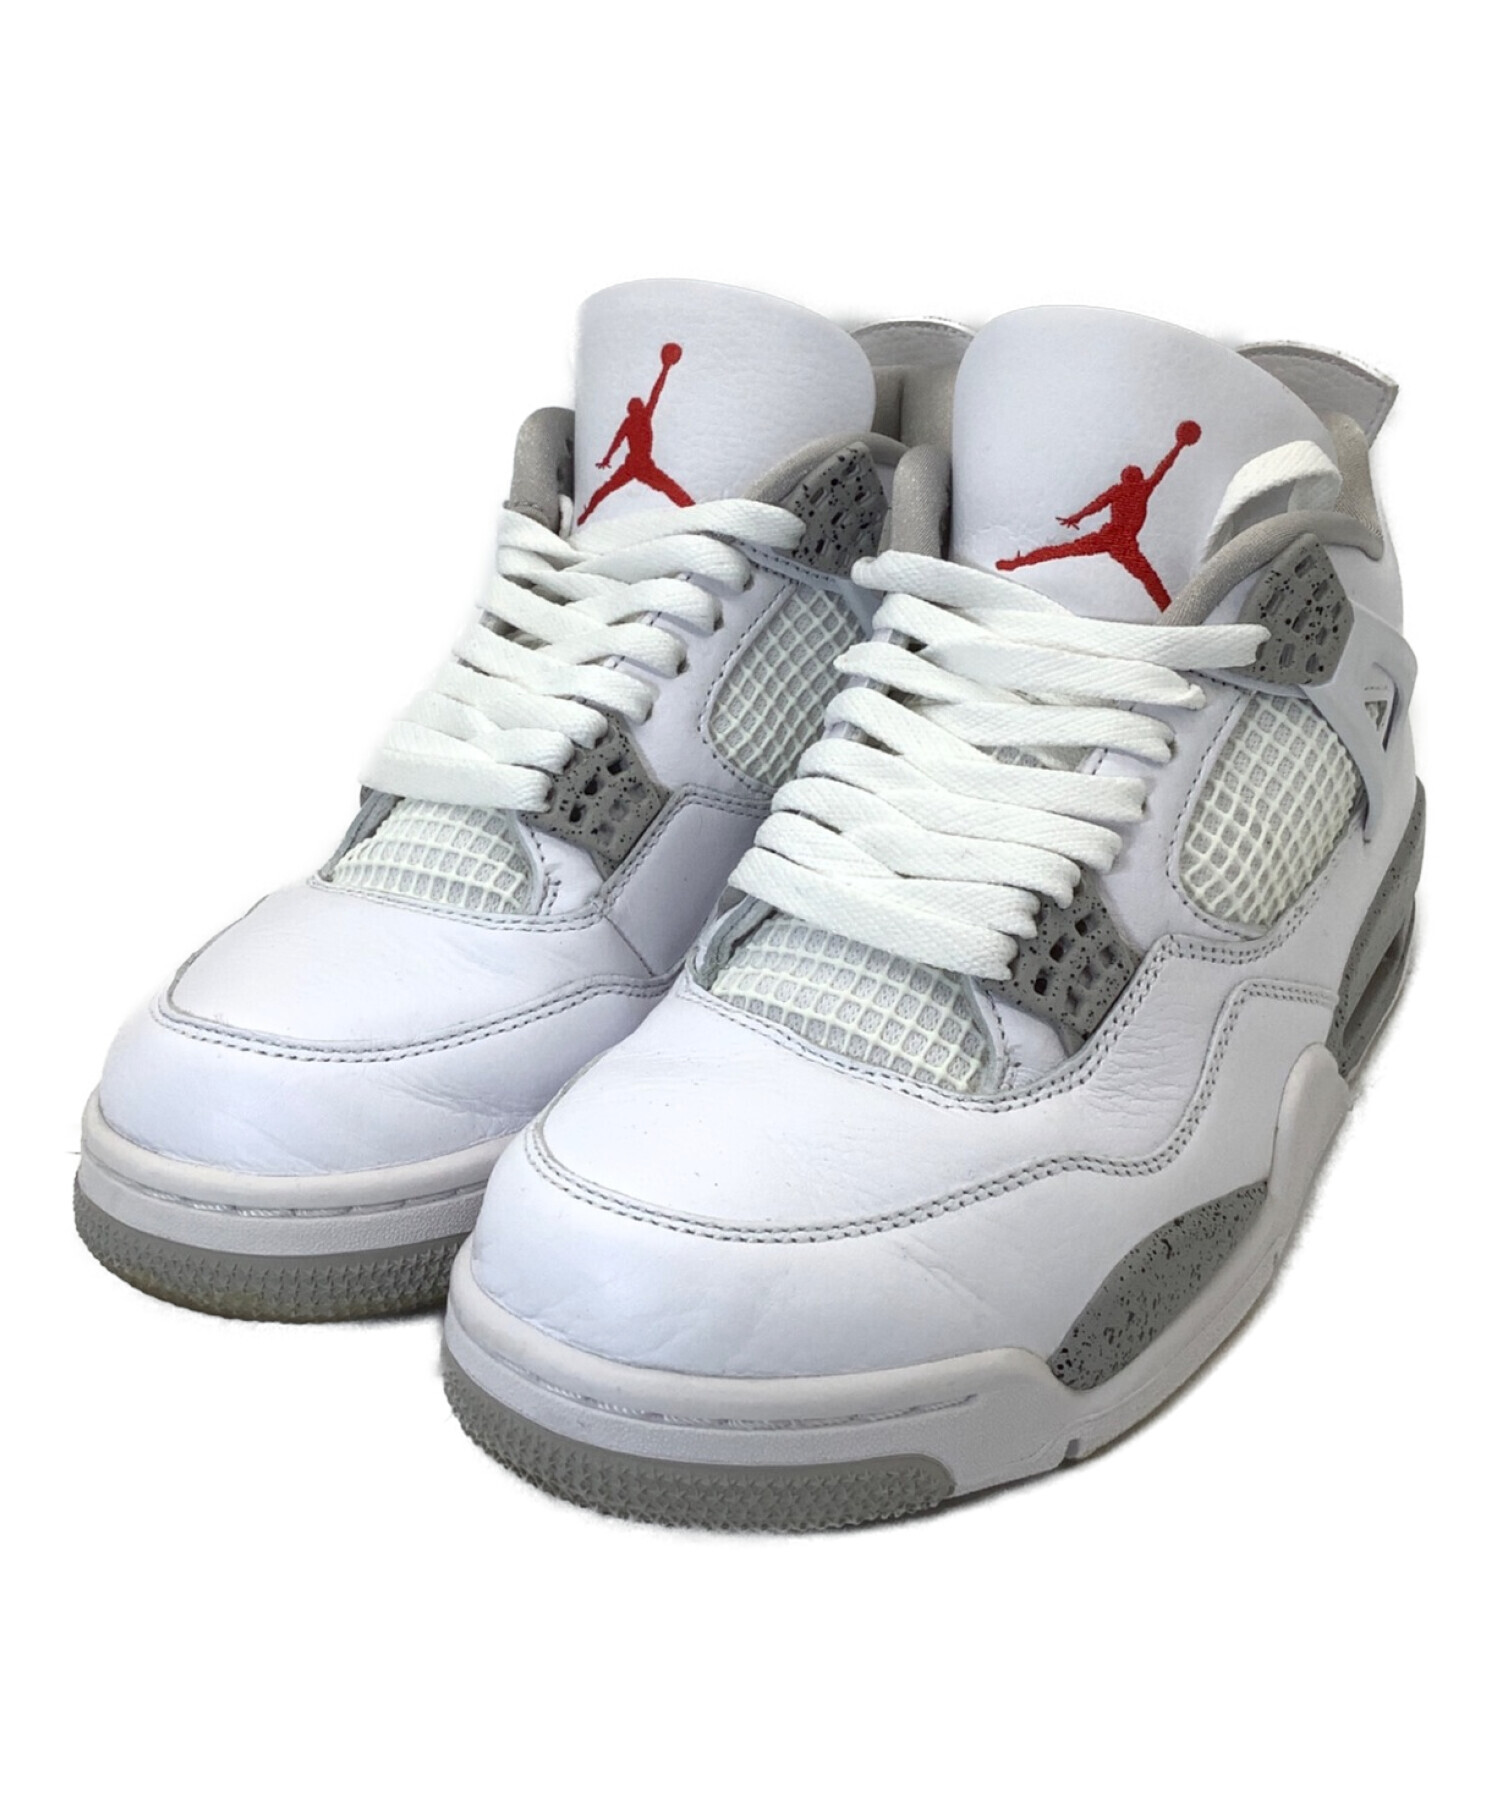 中古・古着通販】NIKE (ナイキ) Nike Air Jordan 4 Tech White ...